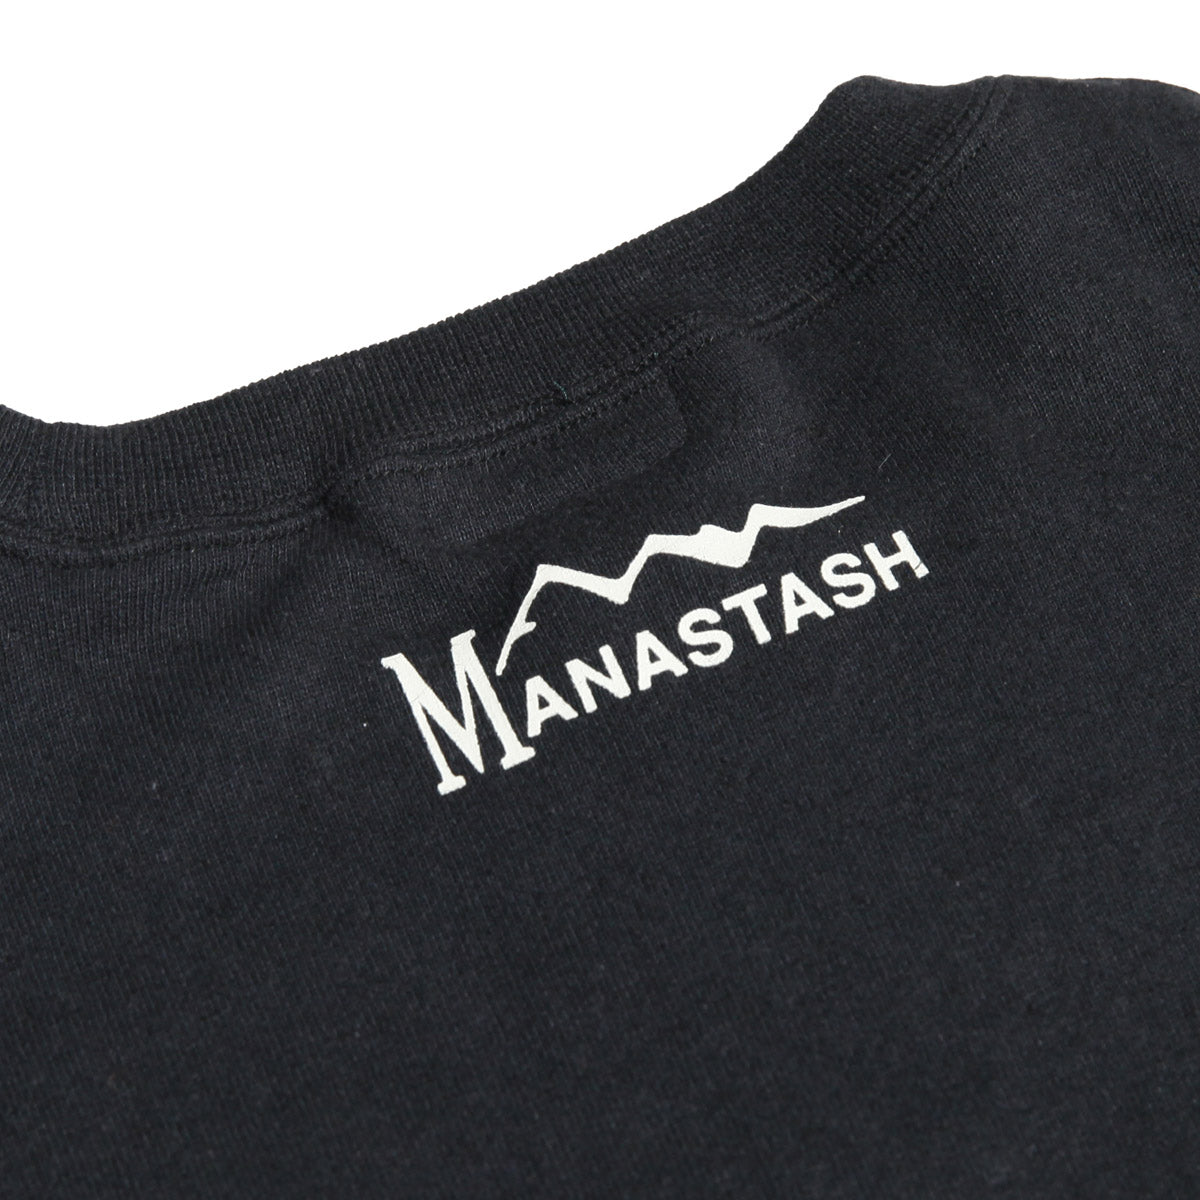 Manastash Camper's Sweatshirt Black